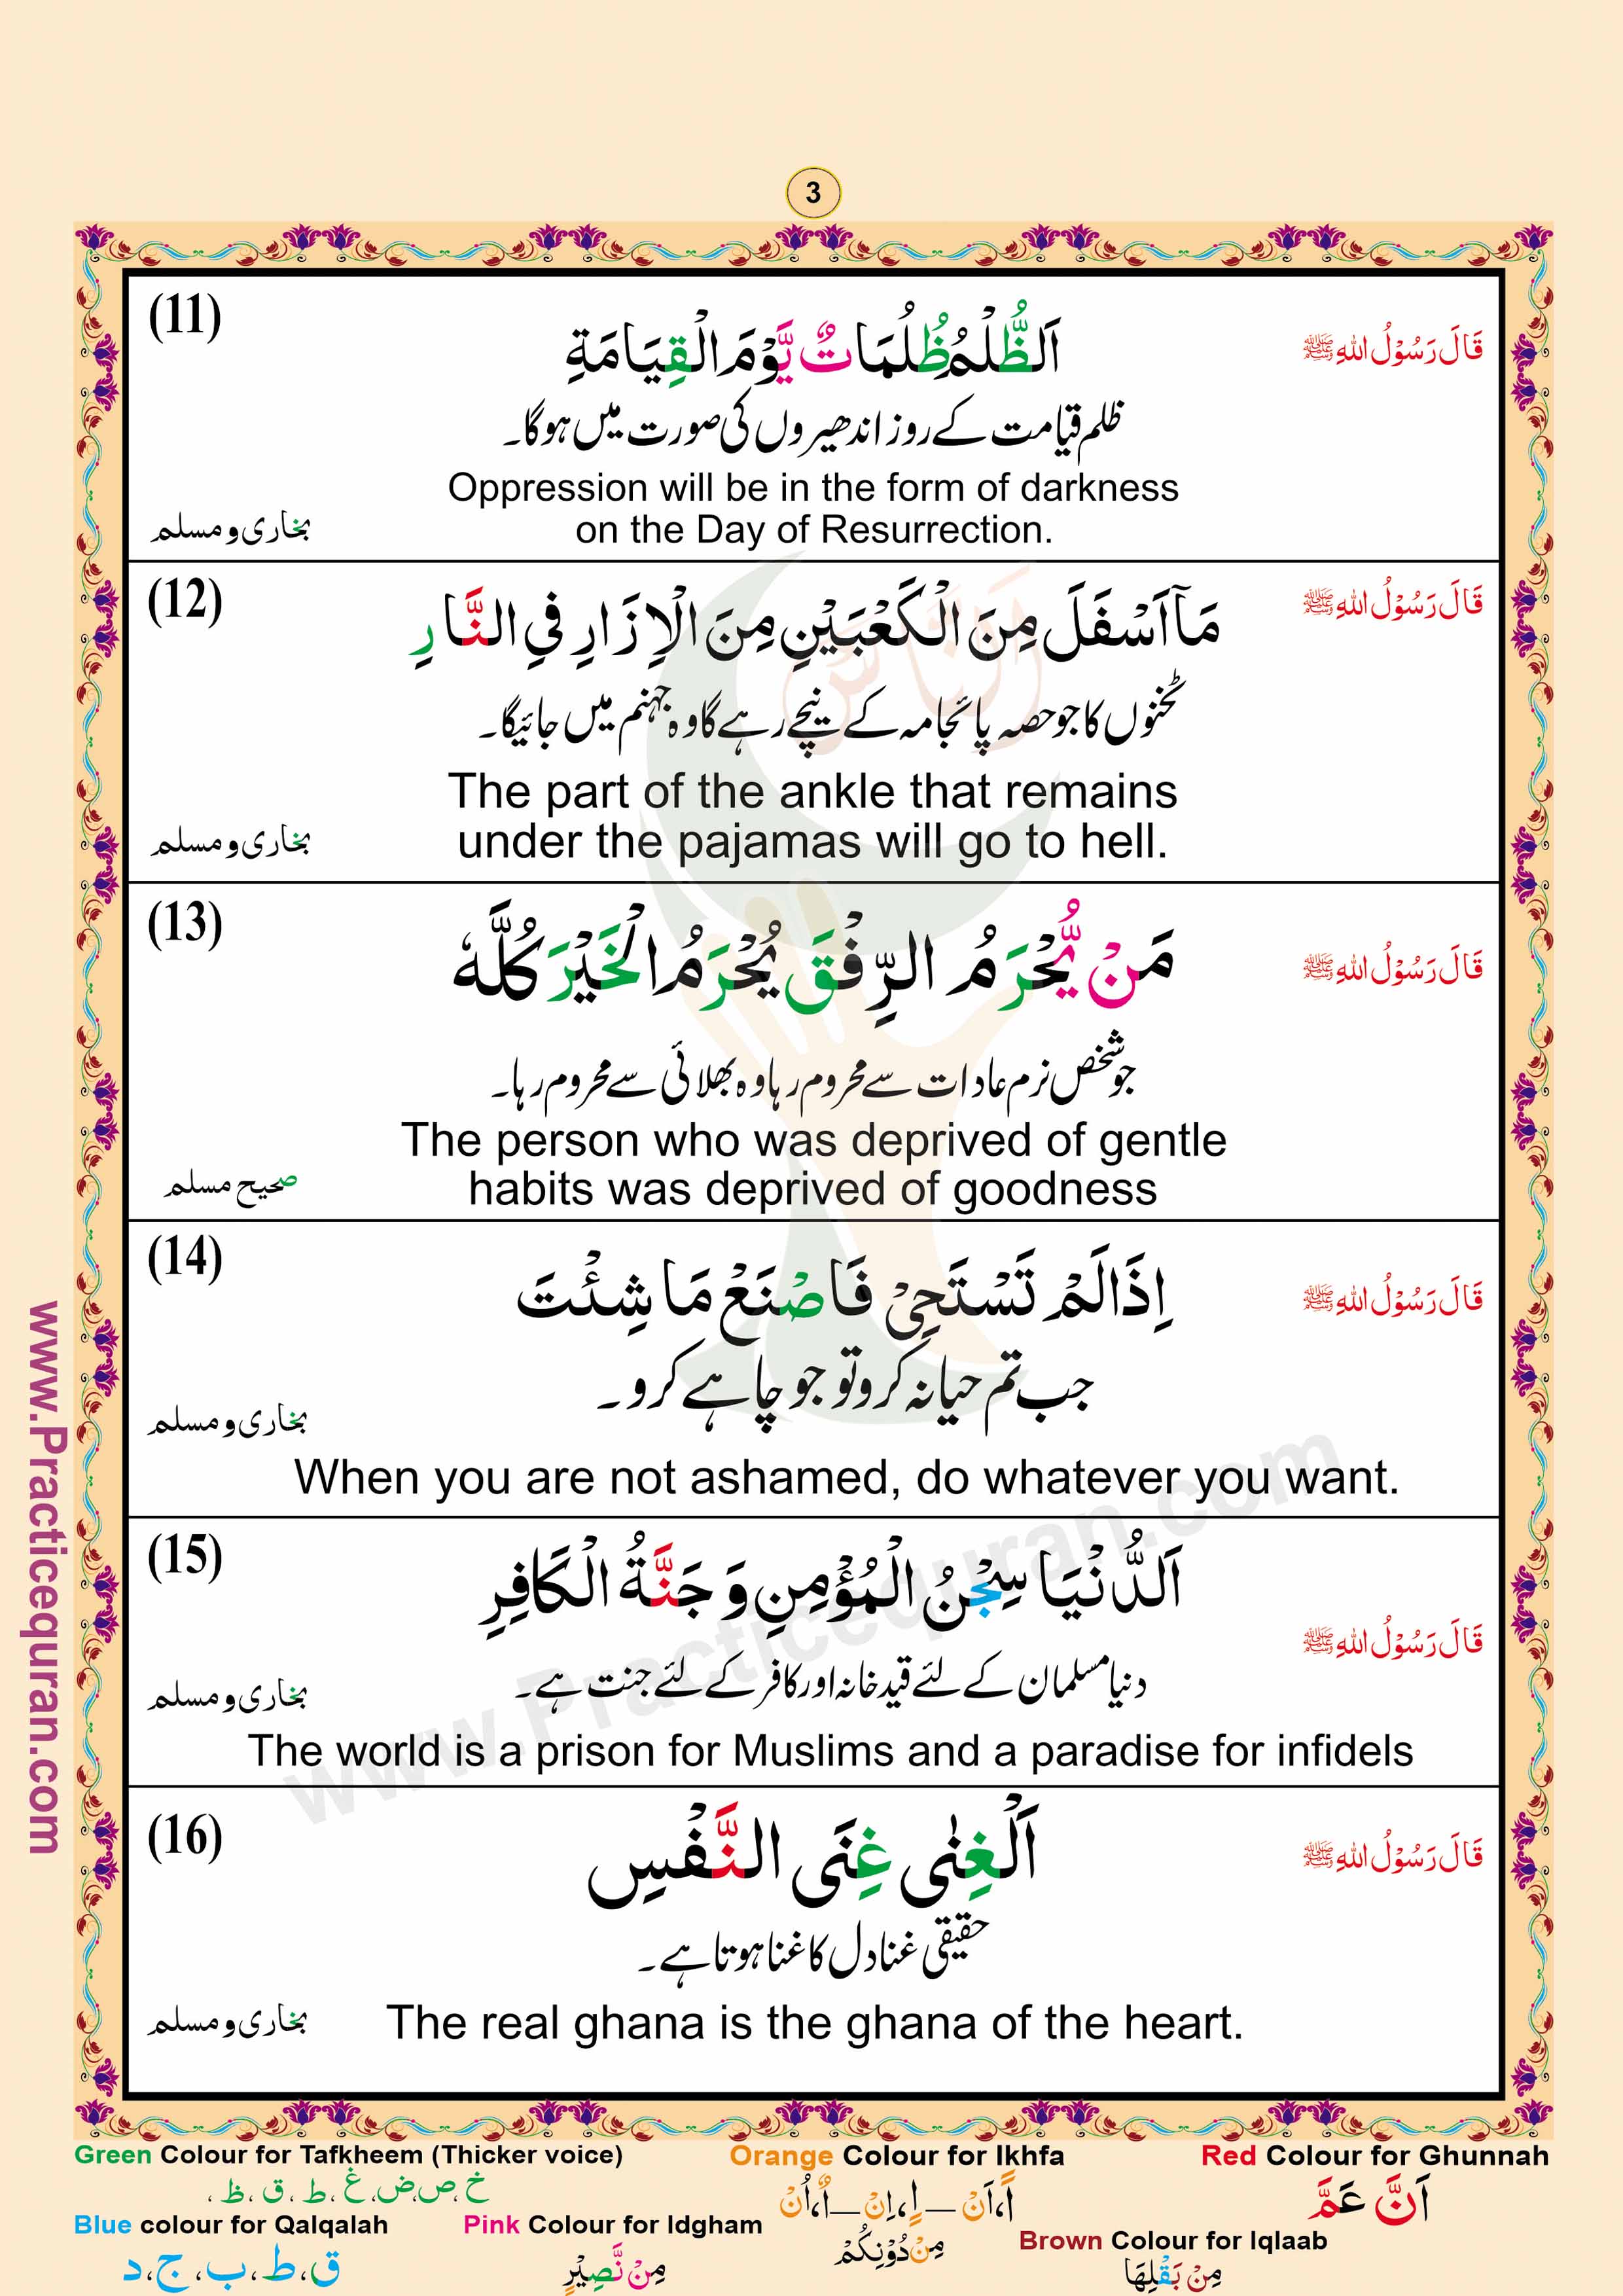 Read Forty Hadith Page No 3, Practice Quran